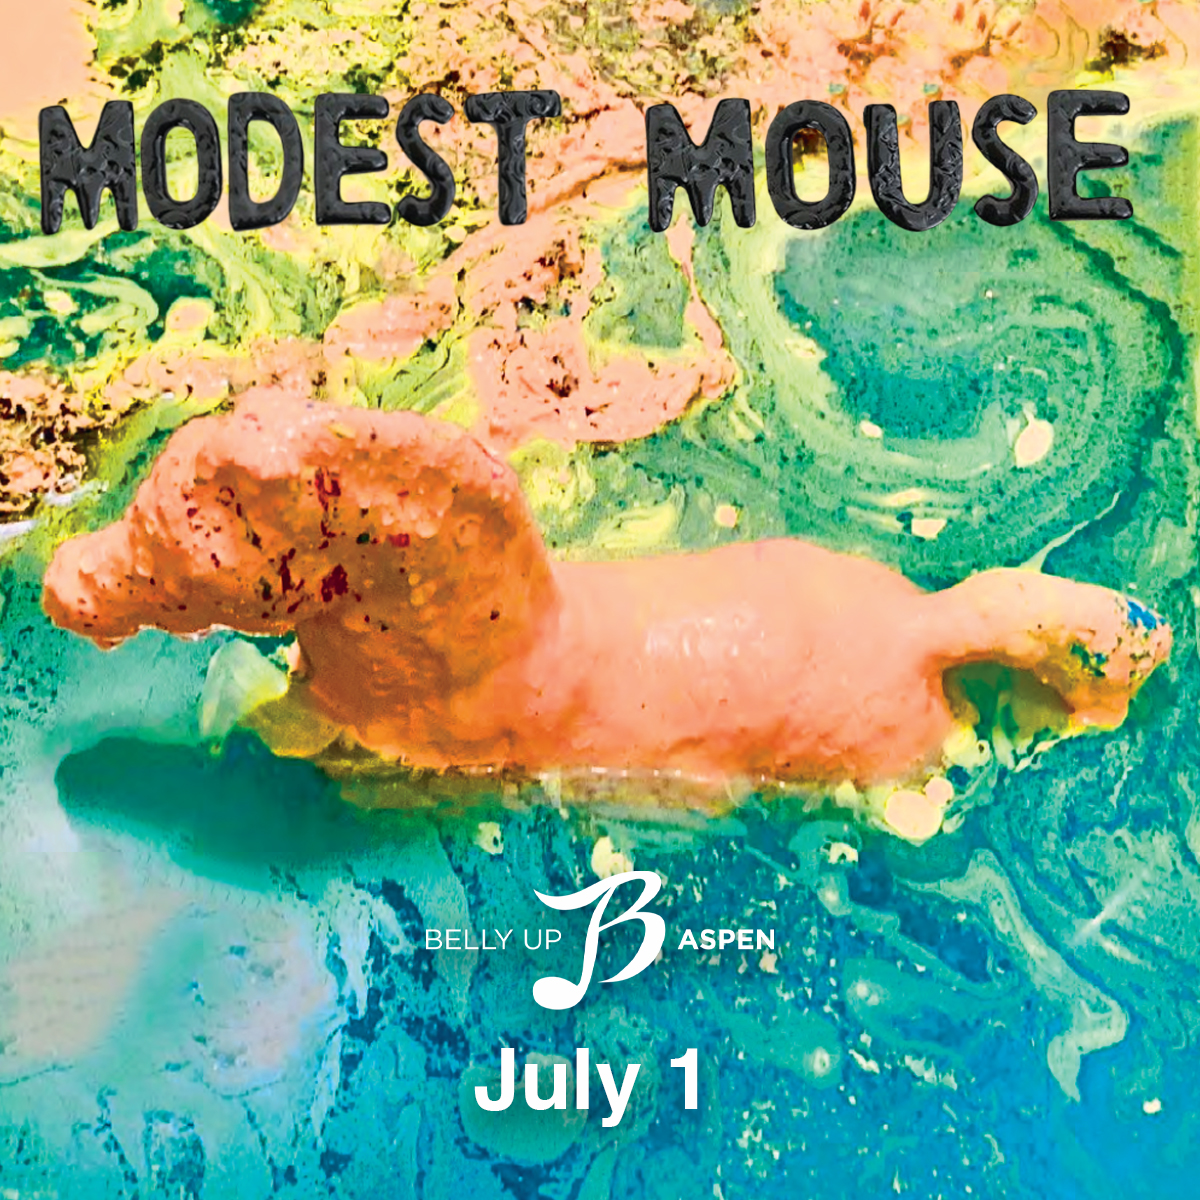 Alt-rock soul band Modest Mouse returns 7/1! Presale starts Thu, 4/18 @ 10am MT. Sign up by 8:30am MT 4/18 to receive the presale code: bit.ly/3MSARpt